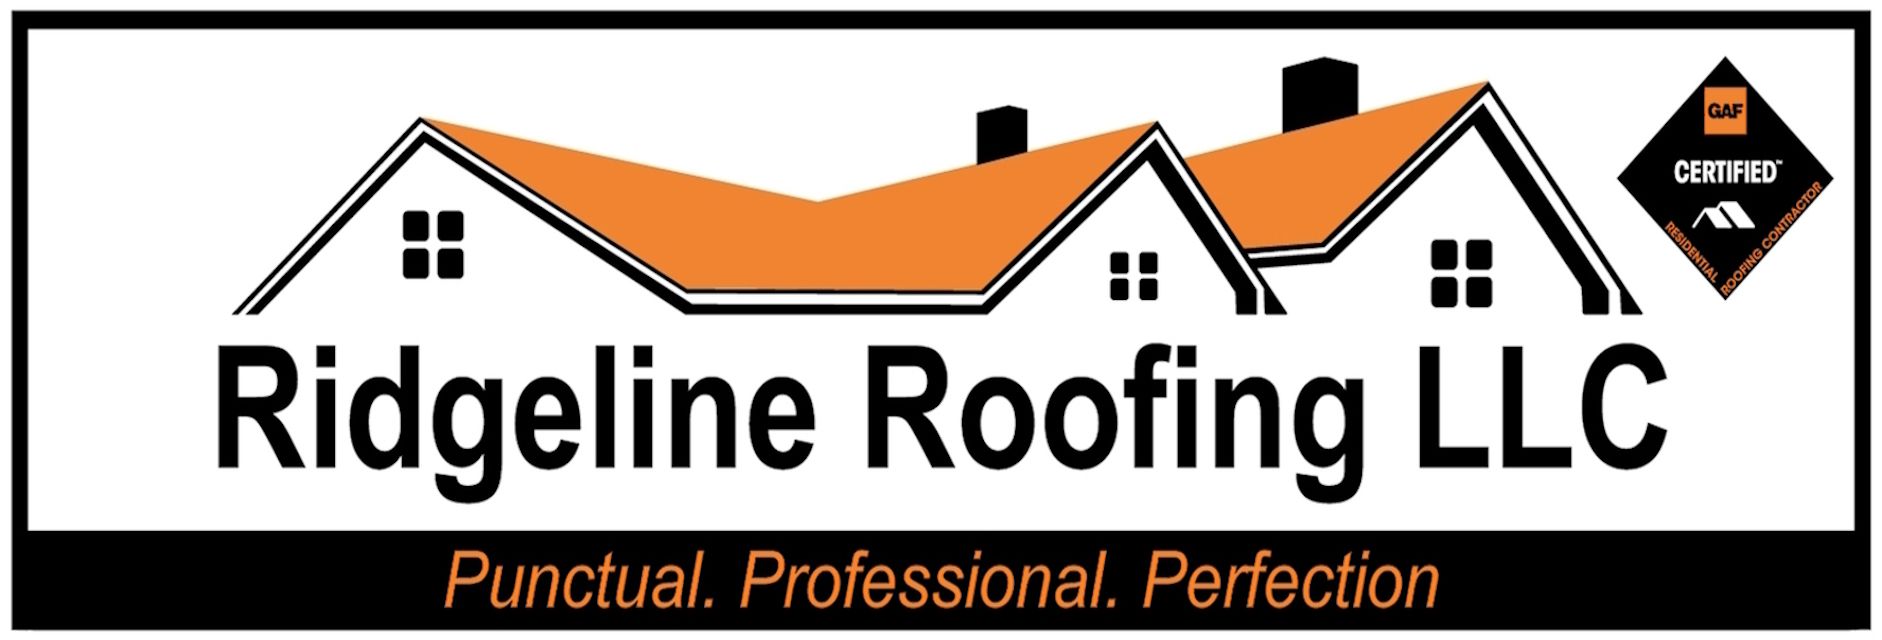 Ridgeline Roofing LLC